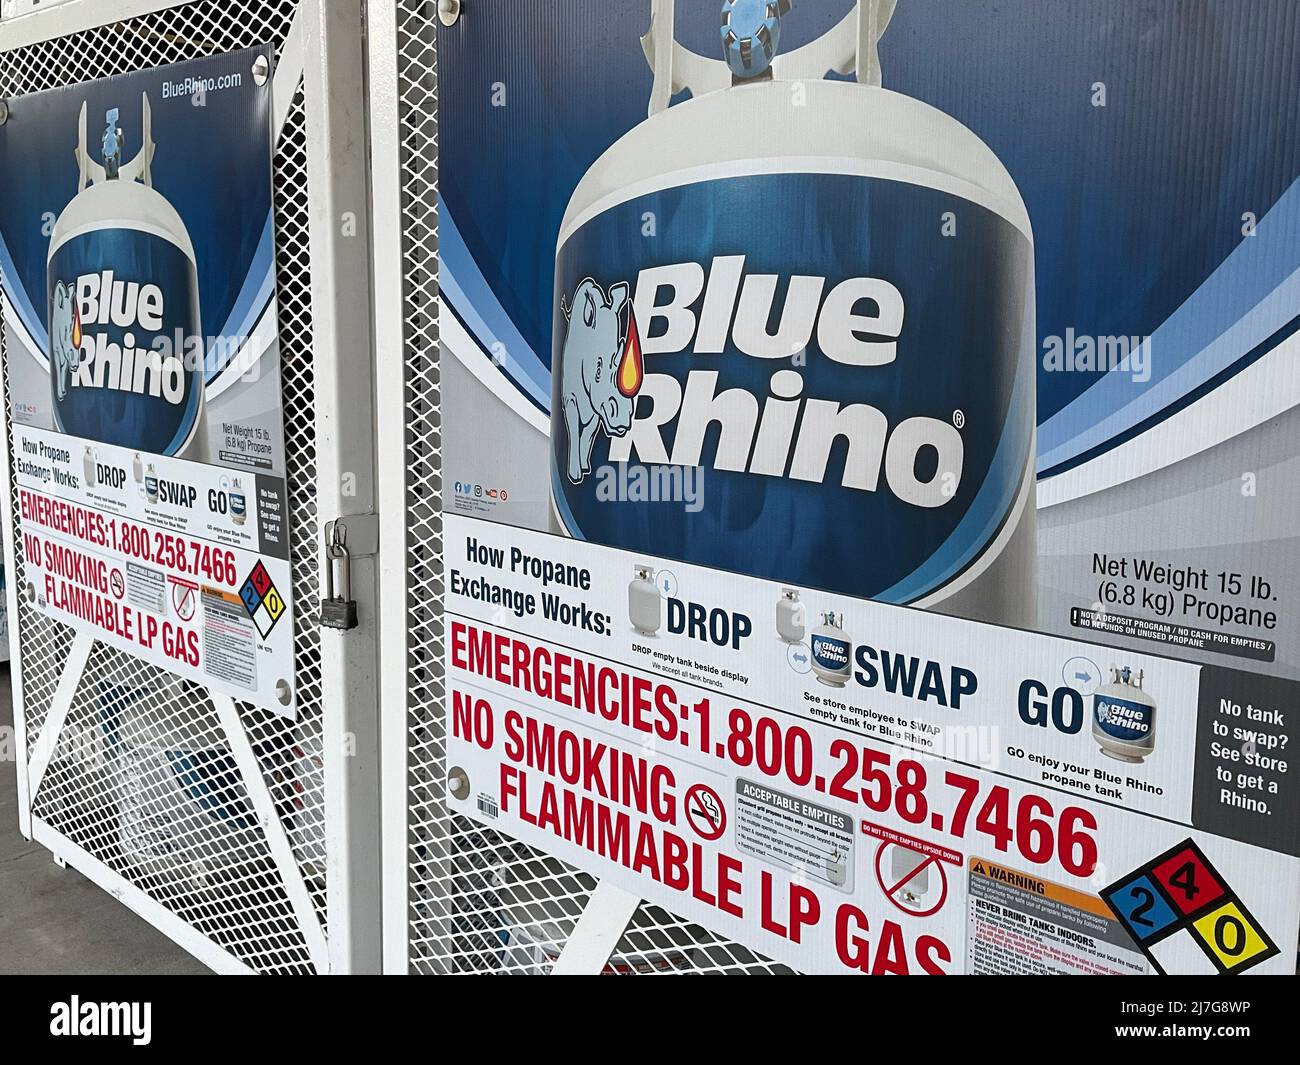 Augusta, Ga USA - 04 27 22: Blue Rhine gas propane tank exchange side view Stock Photo